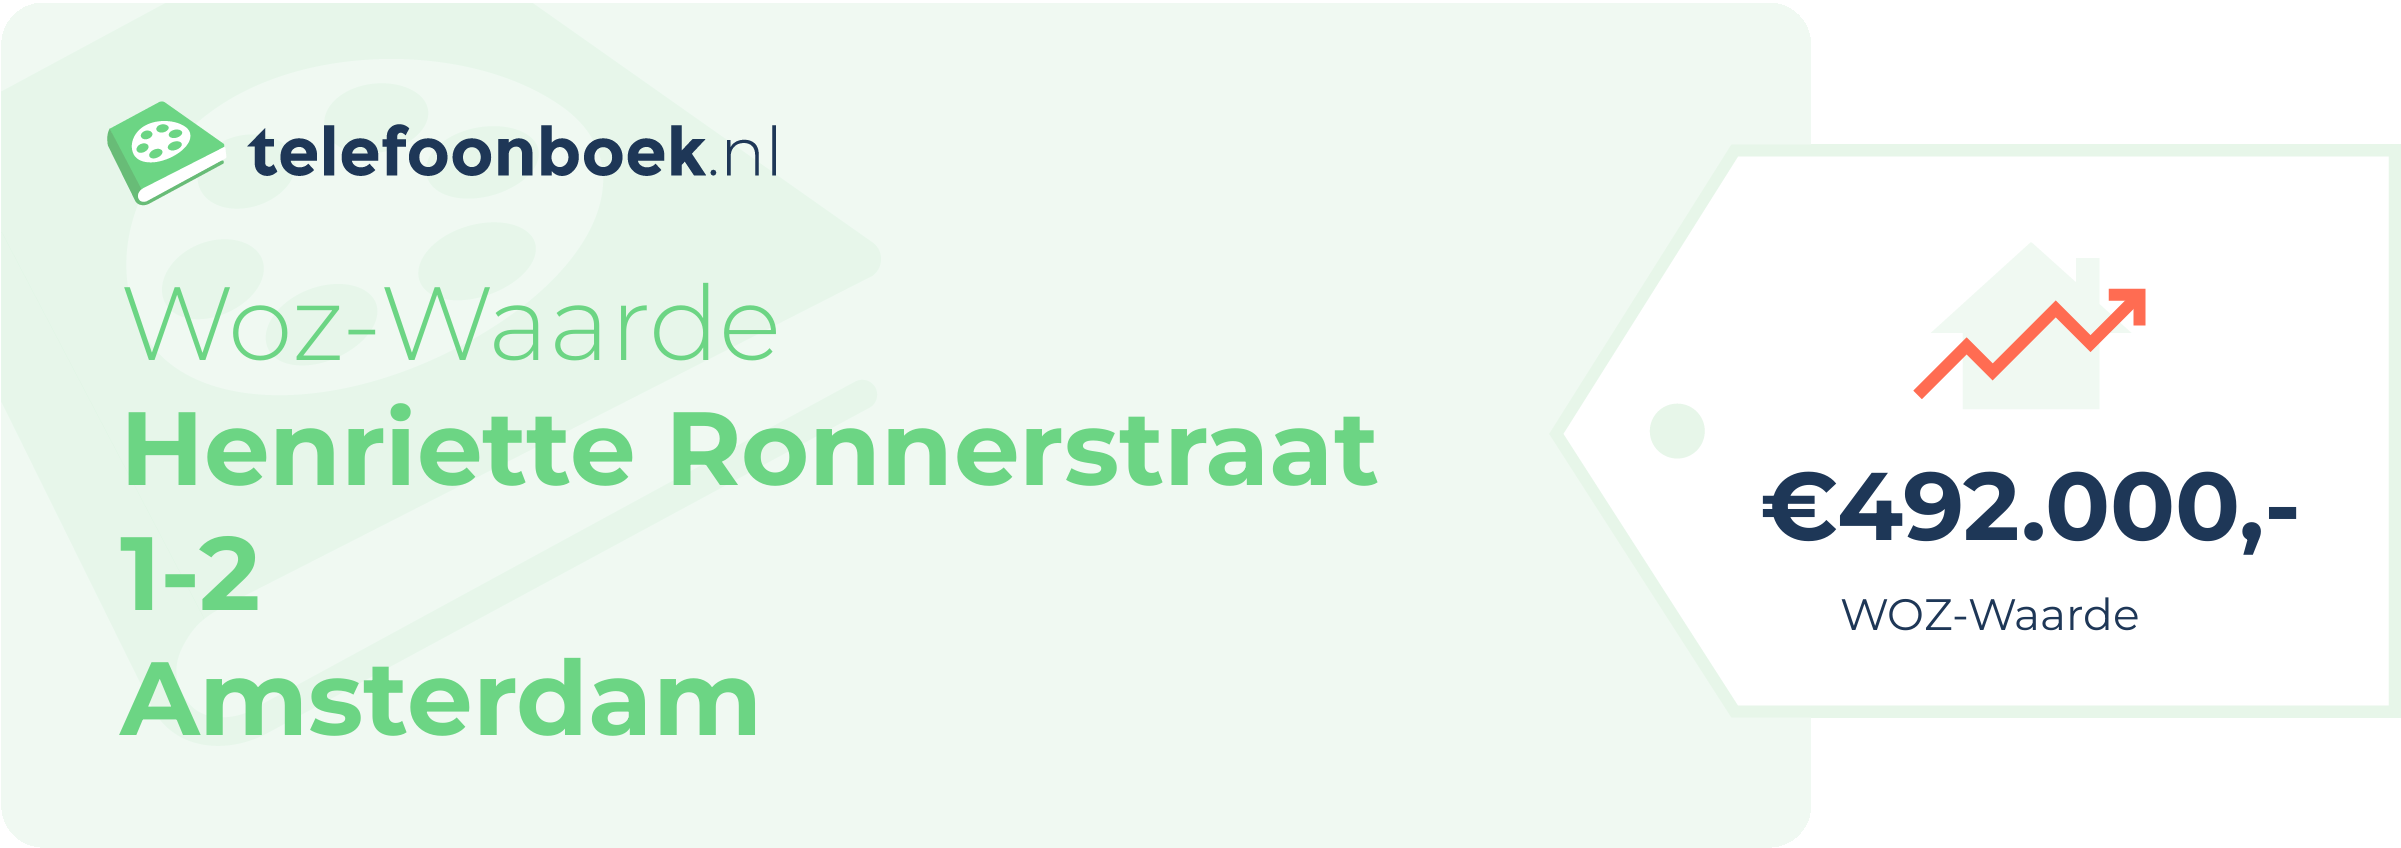 WOZ-waarde Henriette Ronnerstraat 1-2 Amsterdam